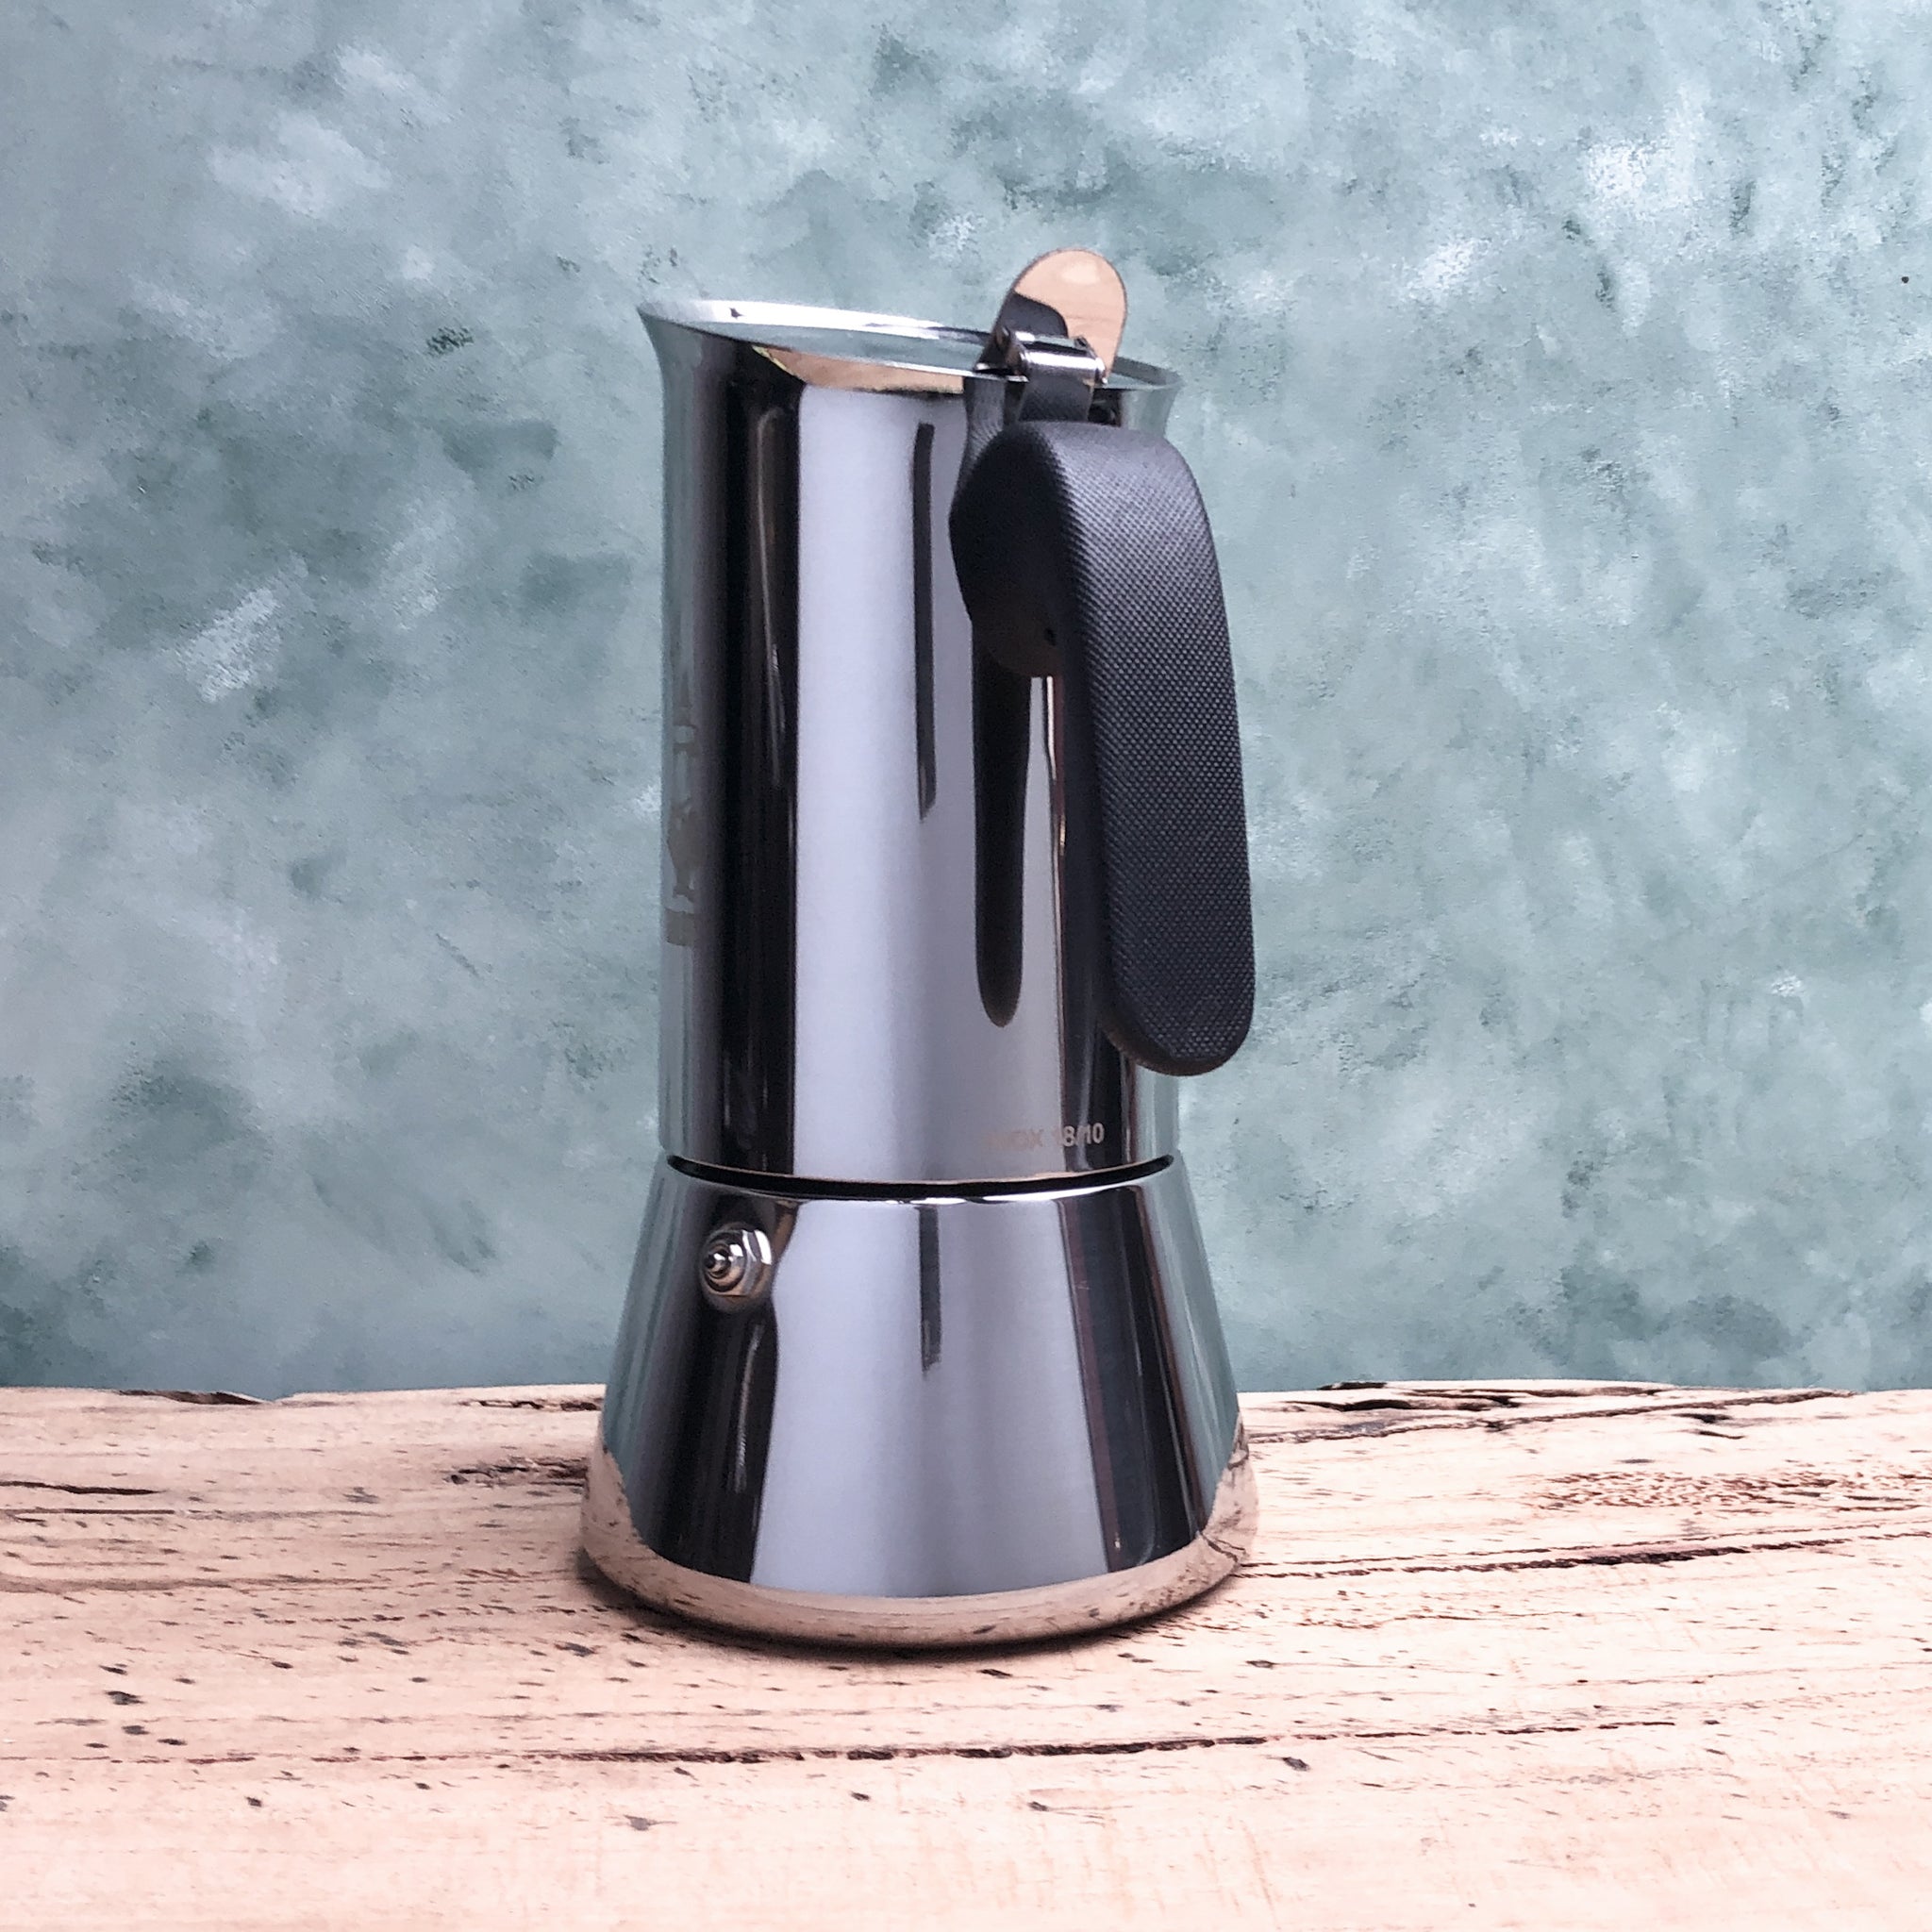 Bialetti Venus Stainless Steel Espresso Maker - 6 Cup